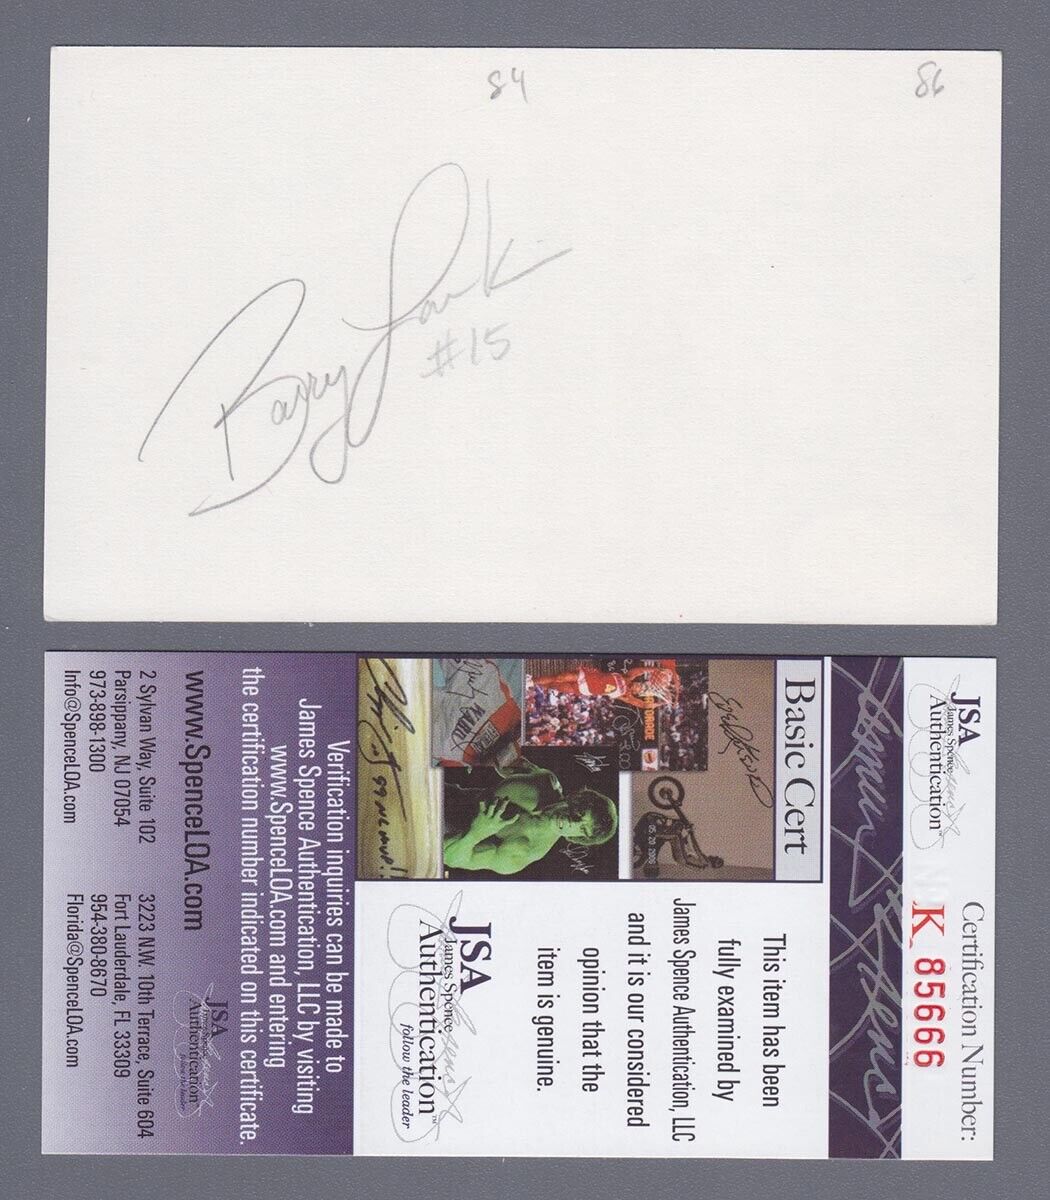 Barry Larkin Autographed Signed HOF Index Card Auto With JSA Certification - Pencil